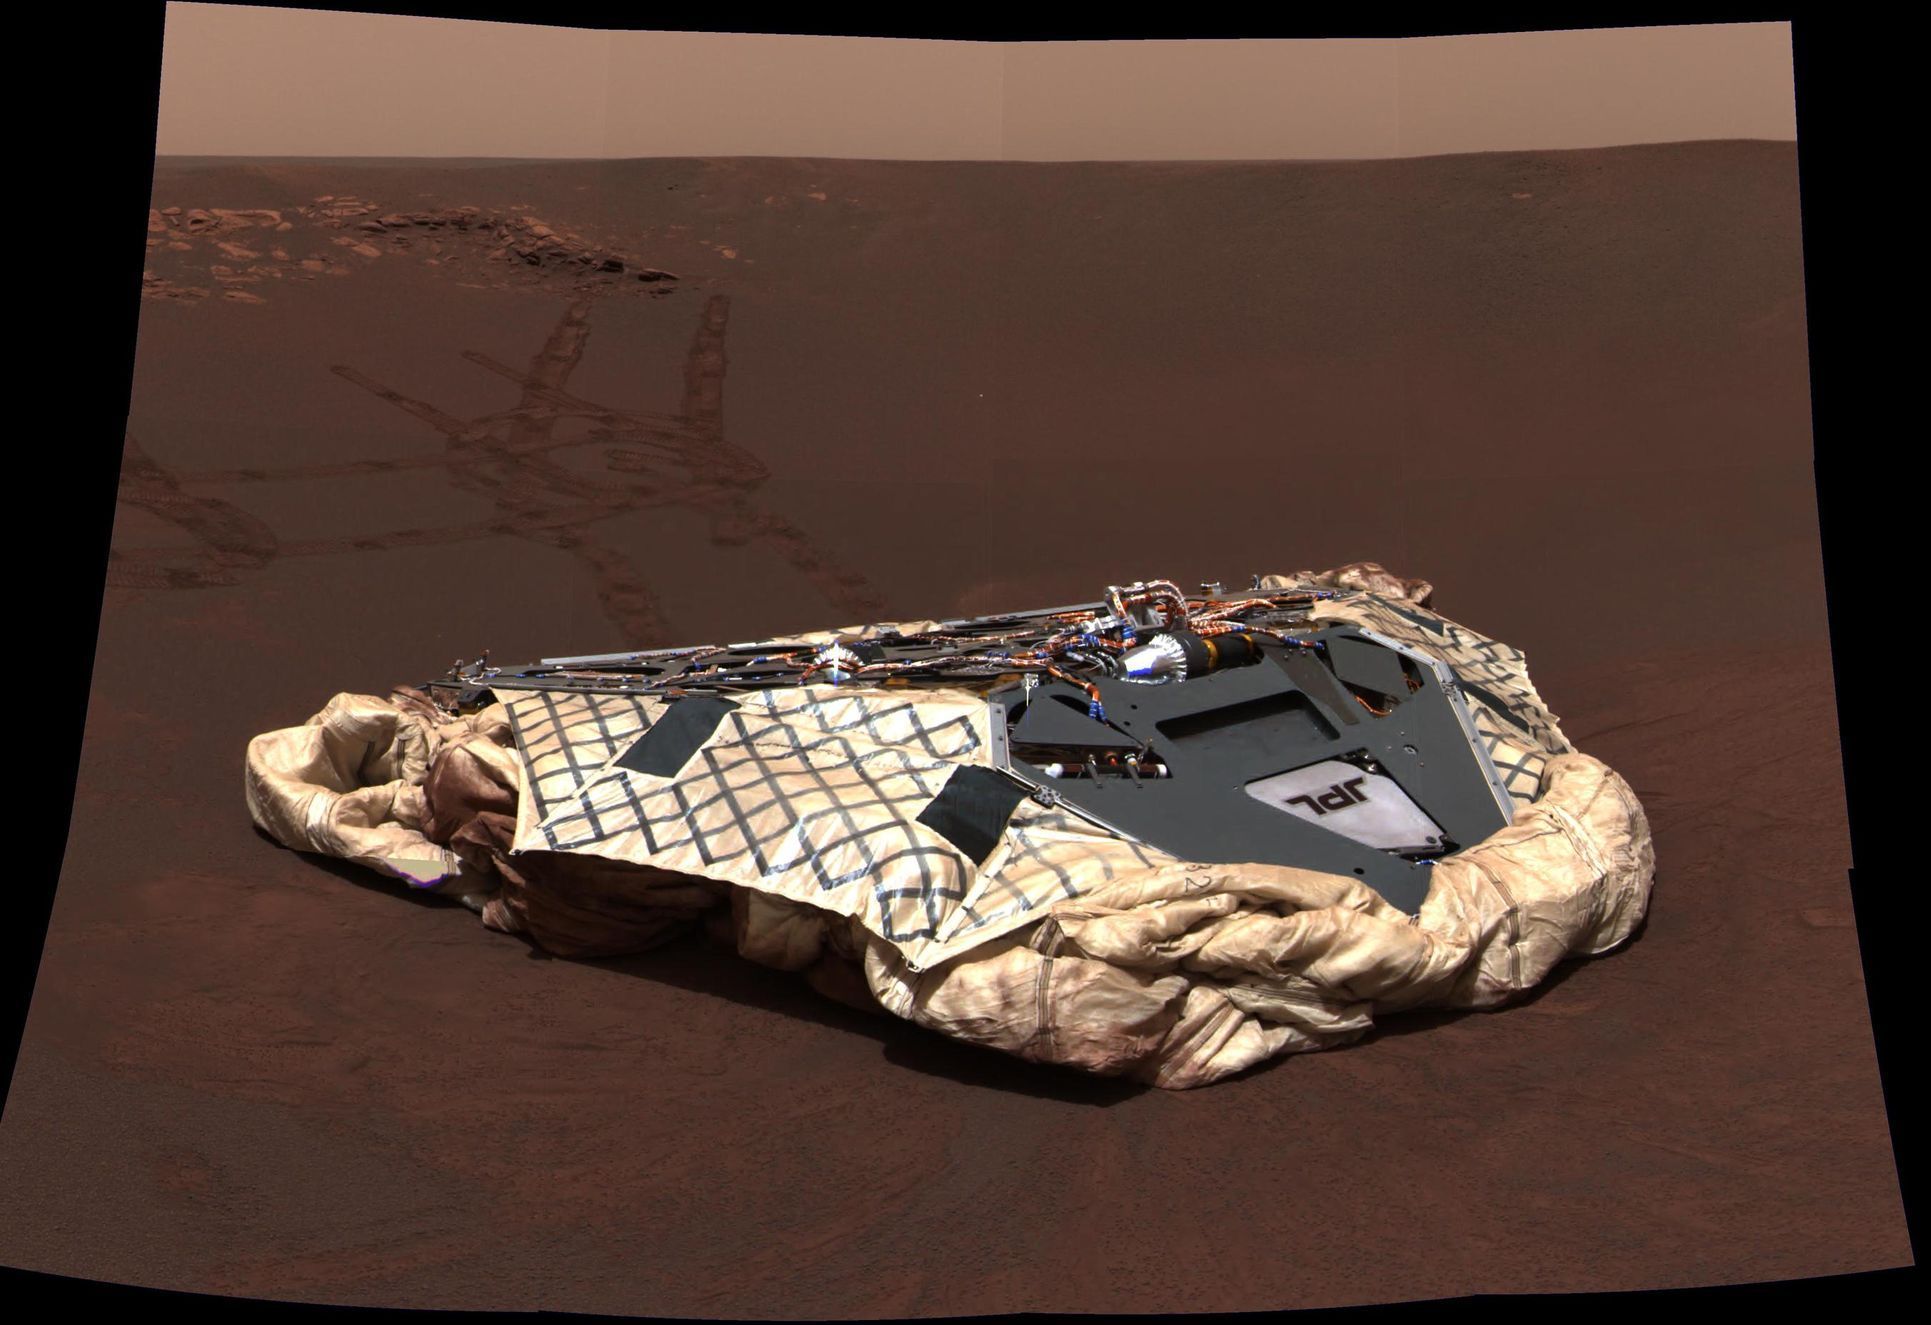 Mars - Opportunity